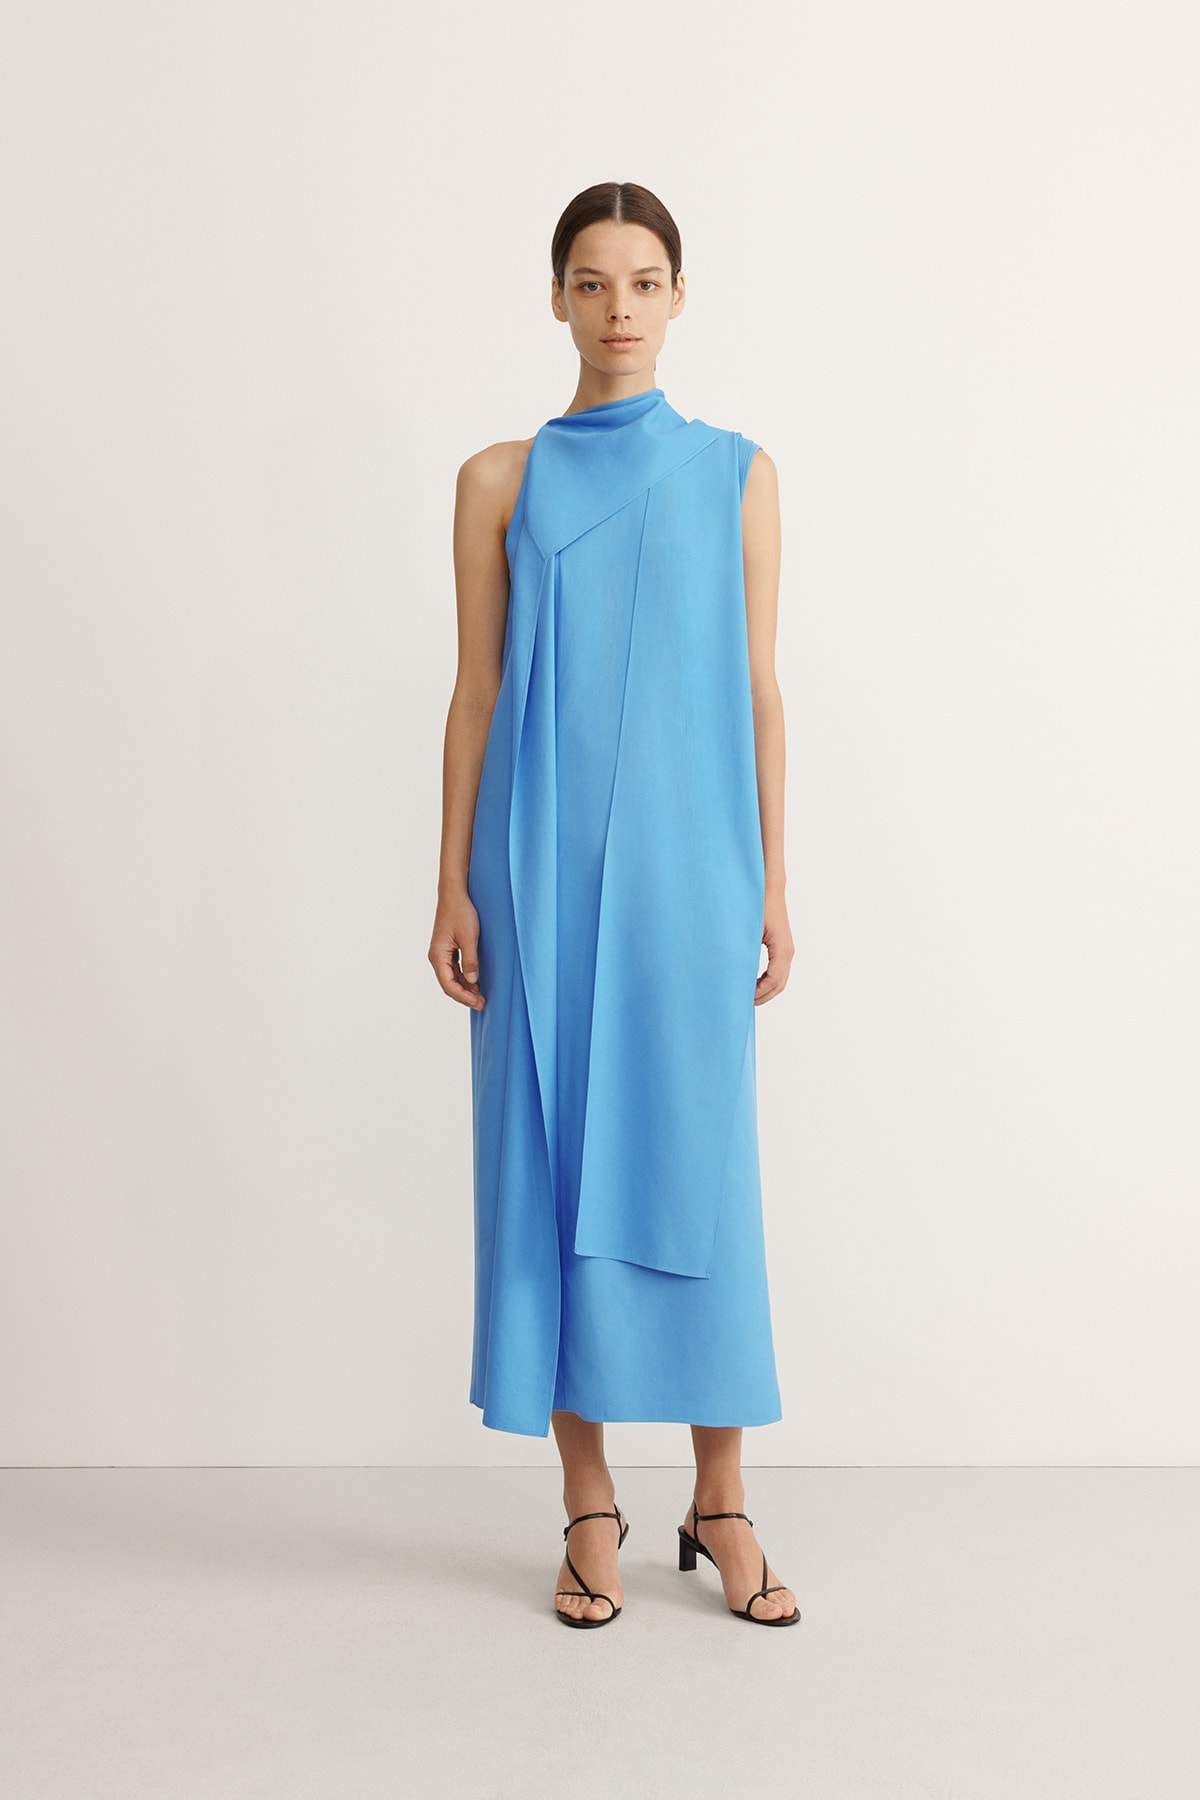 COS Spring Summer 2020 Collection Lookbook Silk Dress Cyan